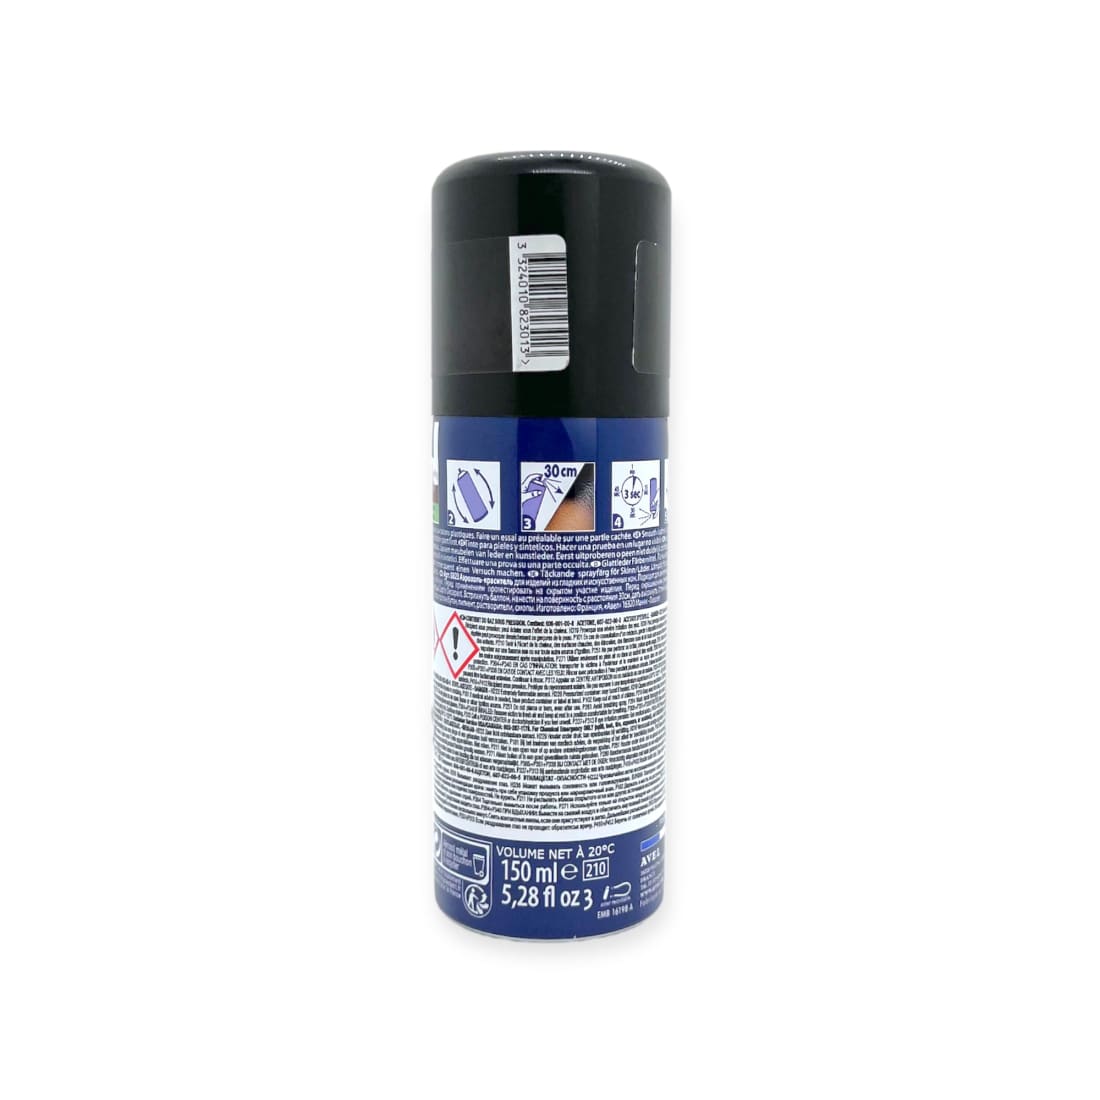 Spray Tenax Teinture Argent Métallisé - Saphir - 150 ml -